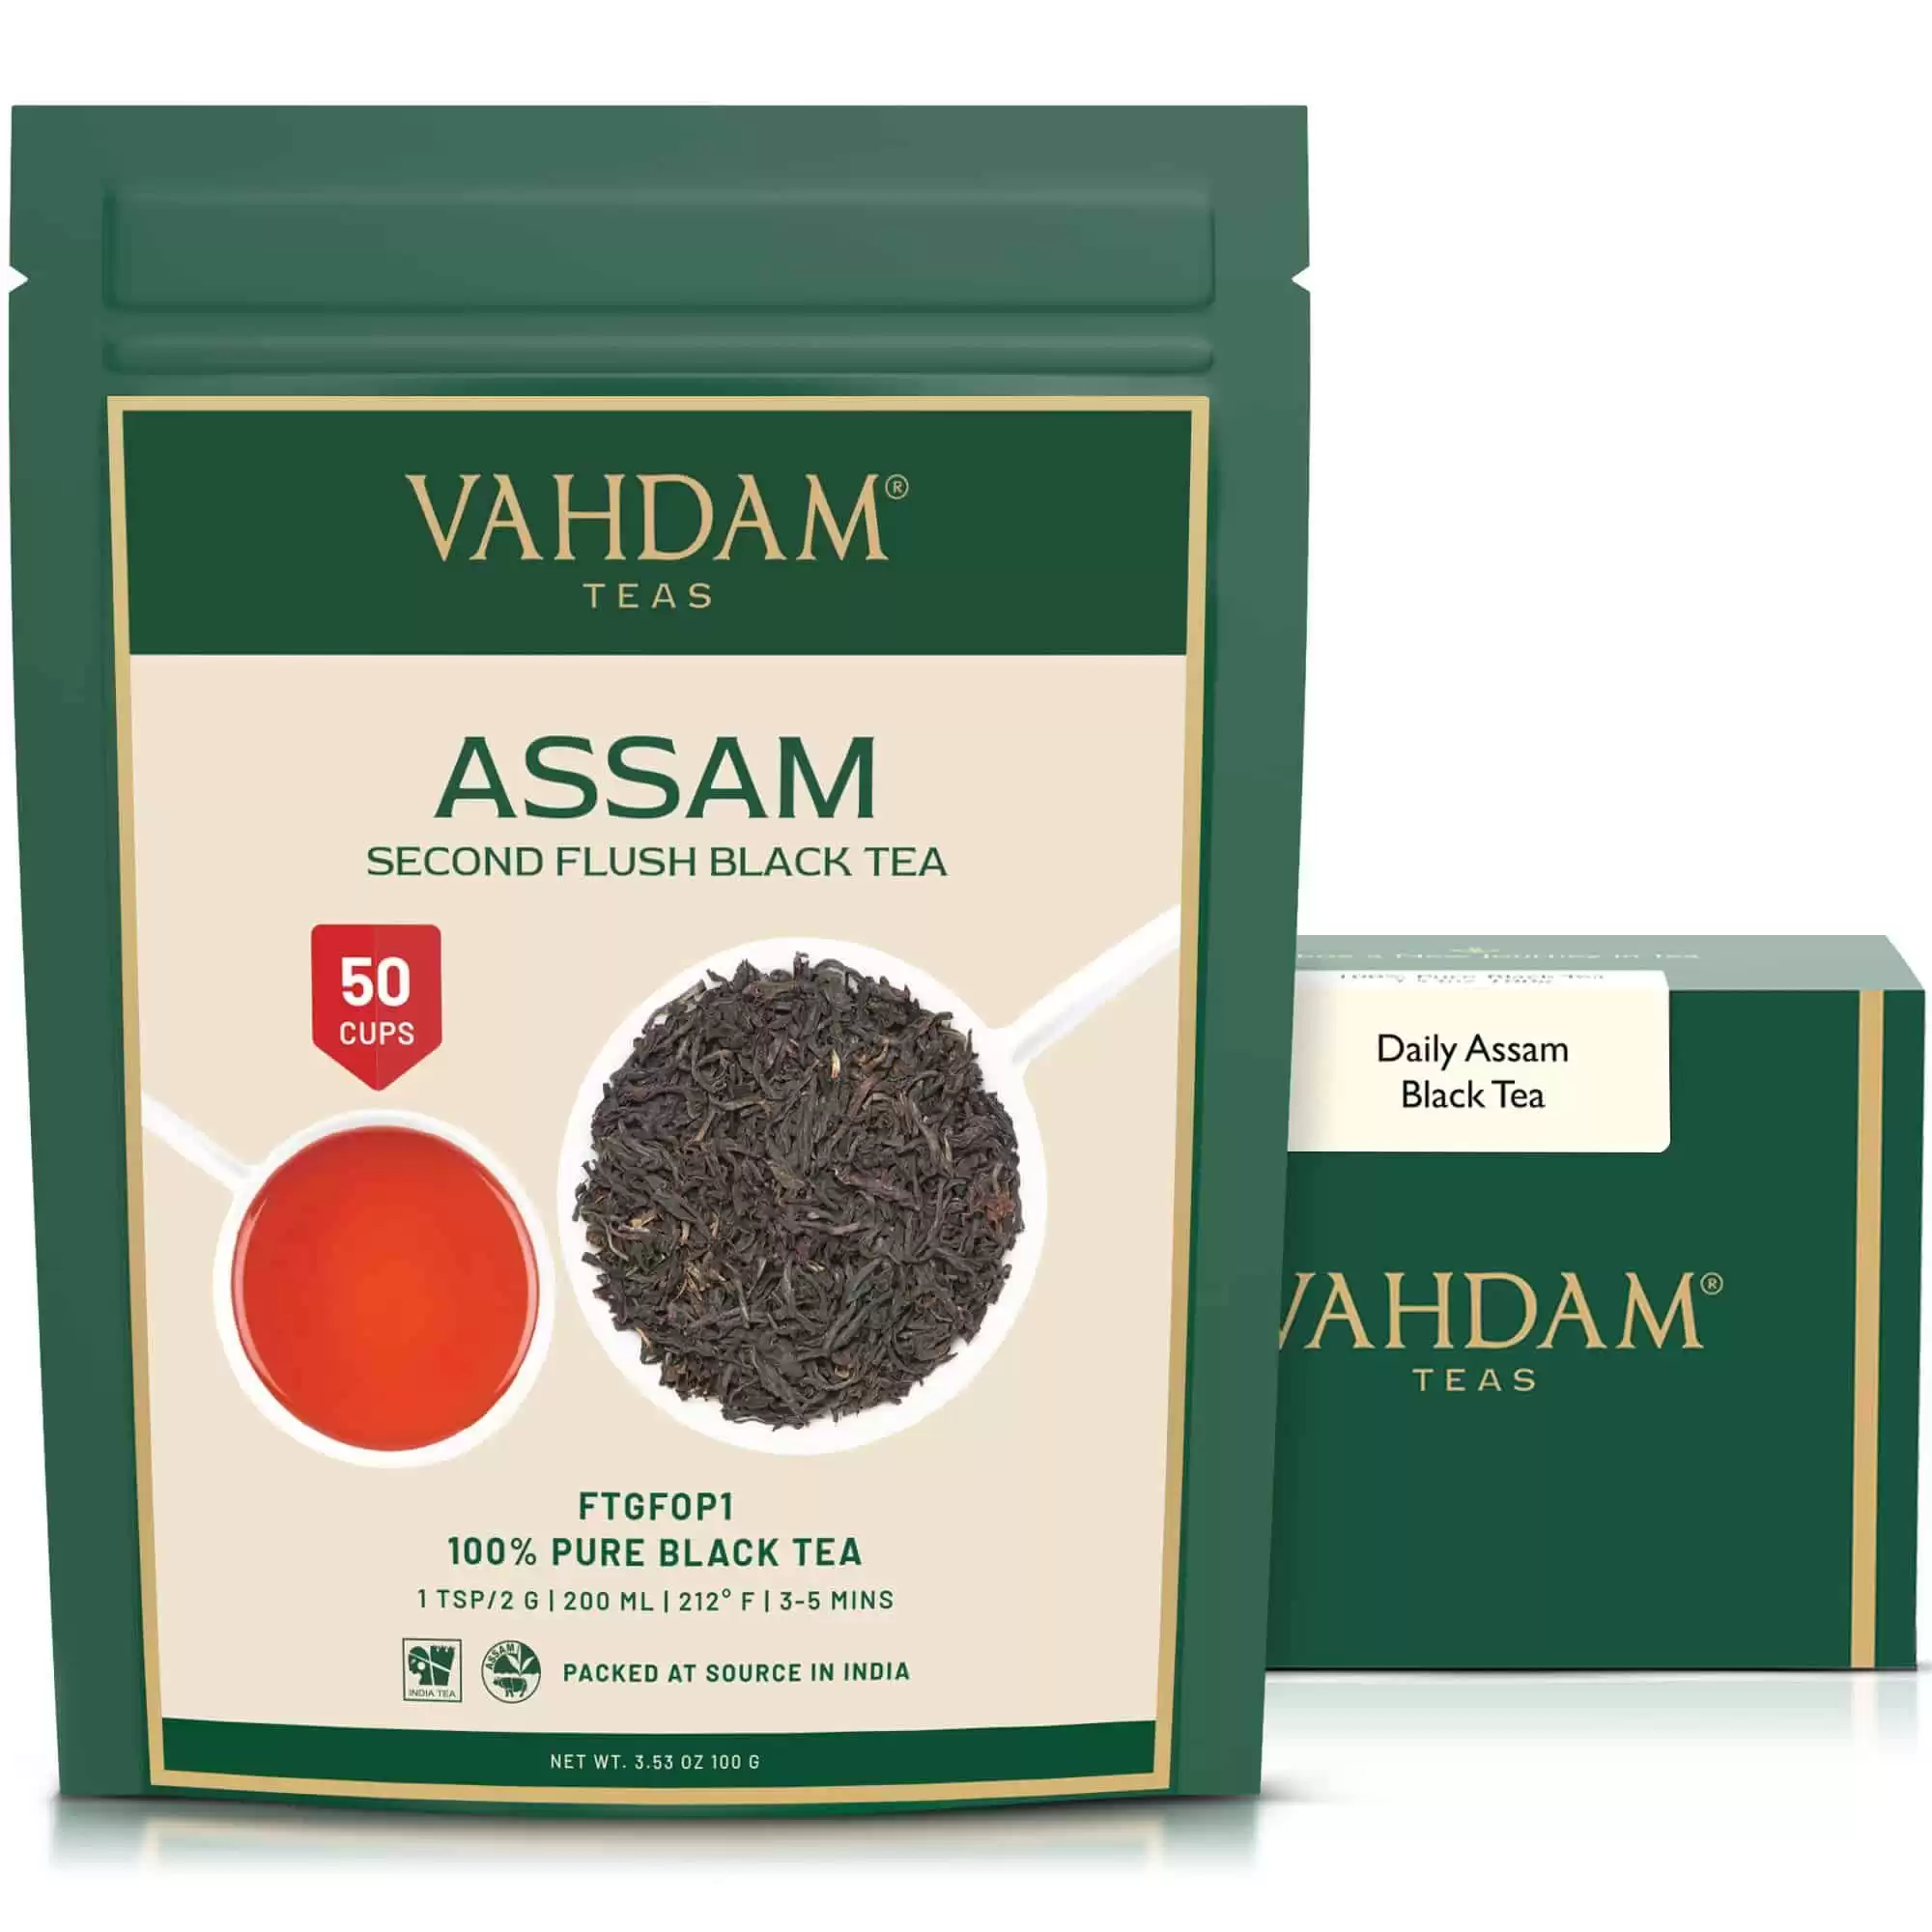 Daily Assam Black Tea